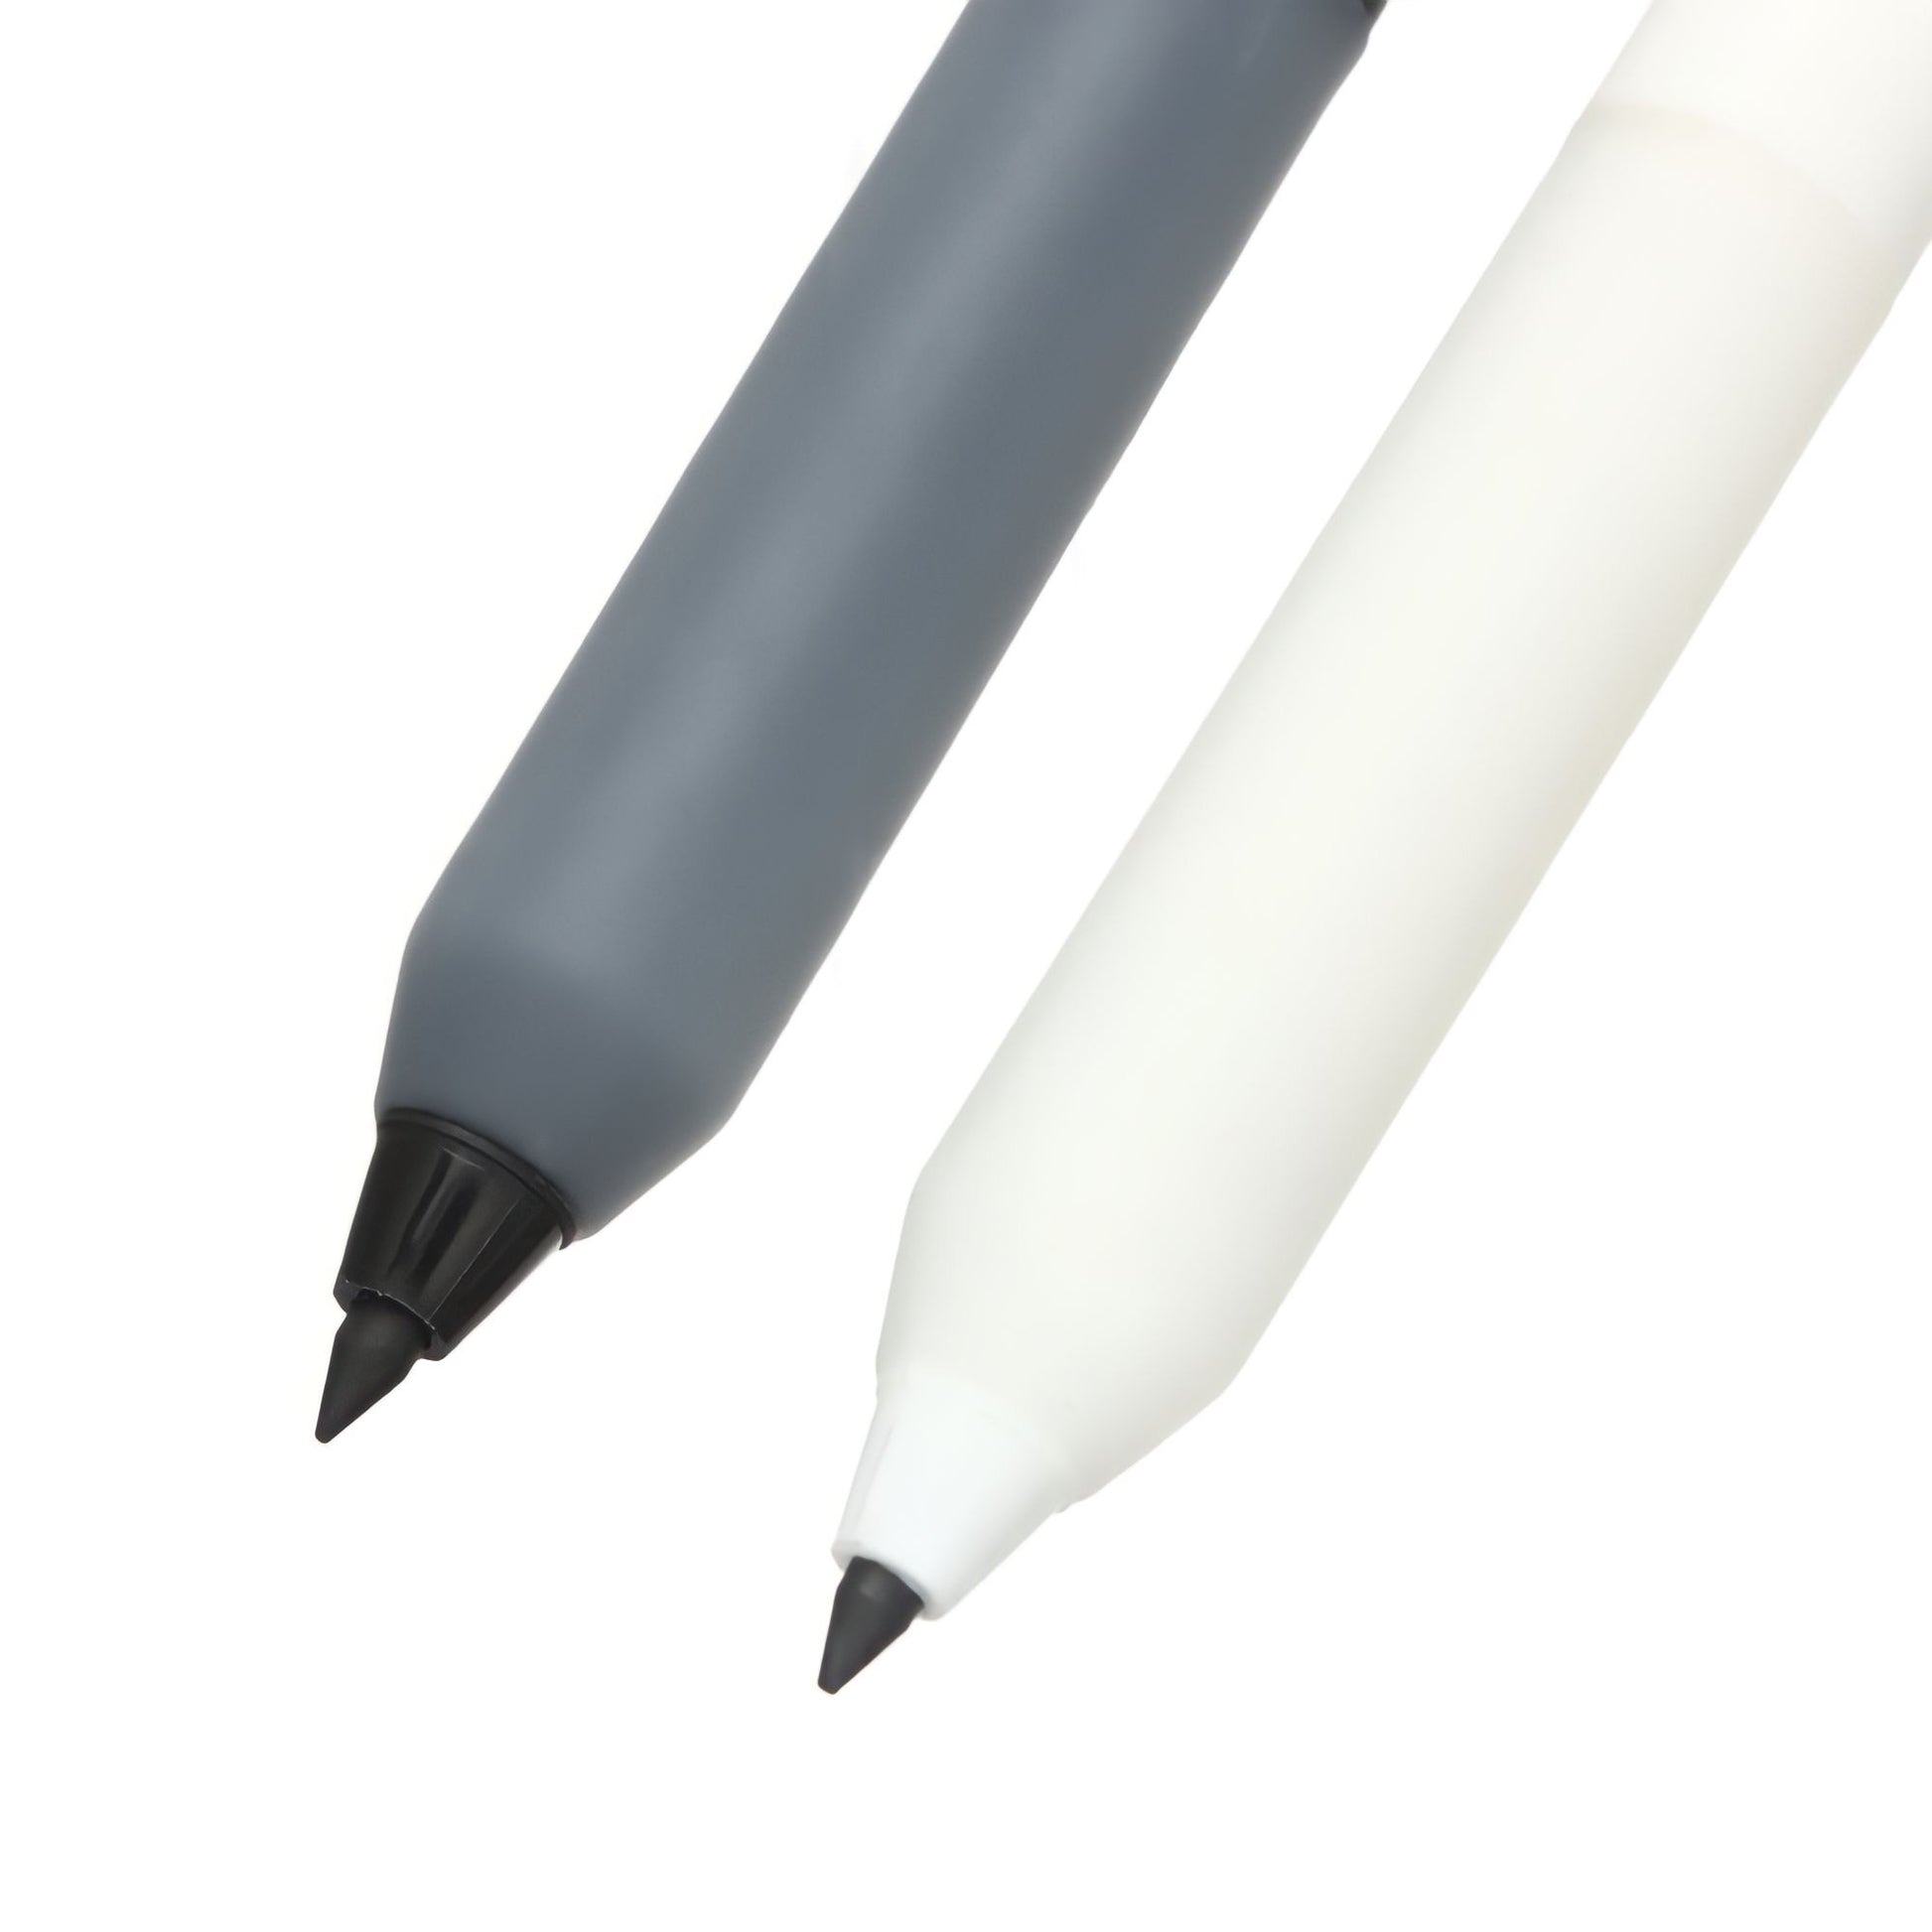 GATXVG Everlasting Pencil,Technology Unlimited Writing Eternal